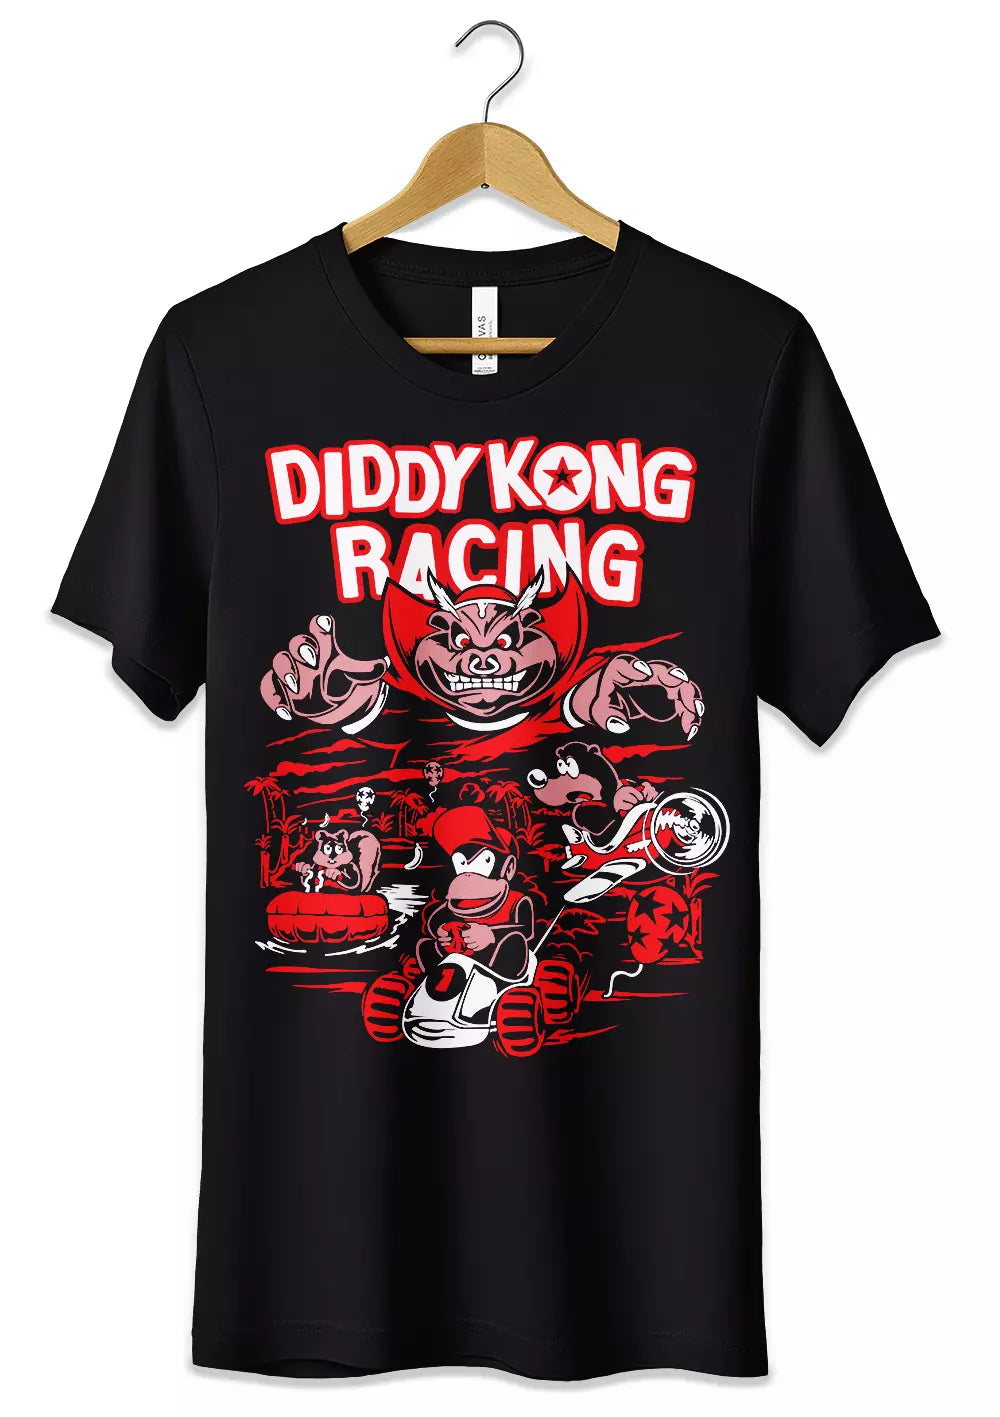 T-Shirt Maglietta Videogames Diddy Kong Racing, CmrDesignStore, T-Shirt, t-shirt-maglietta-videogames-diddy-kong-racing, CmrDesignStore